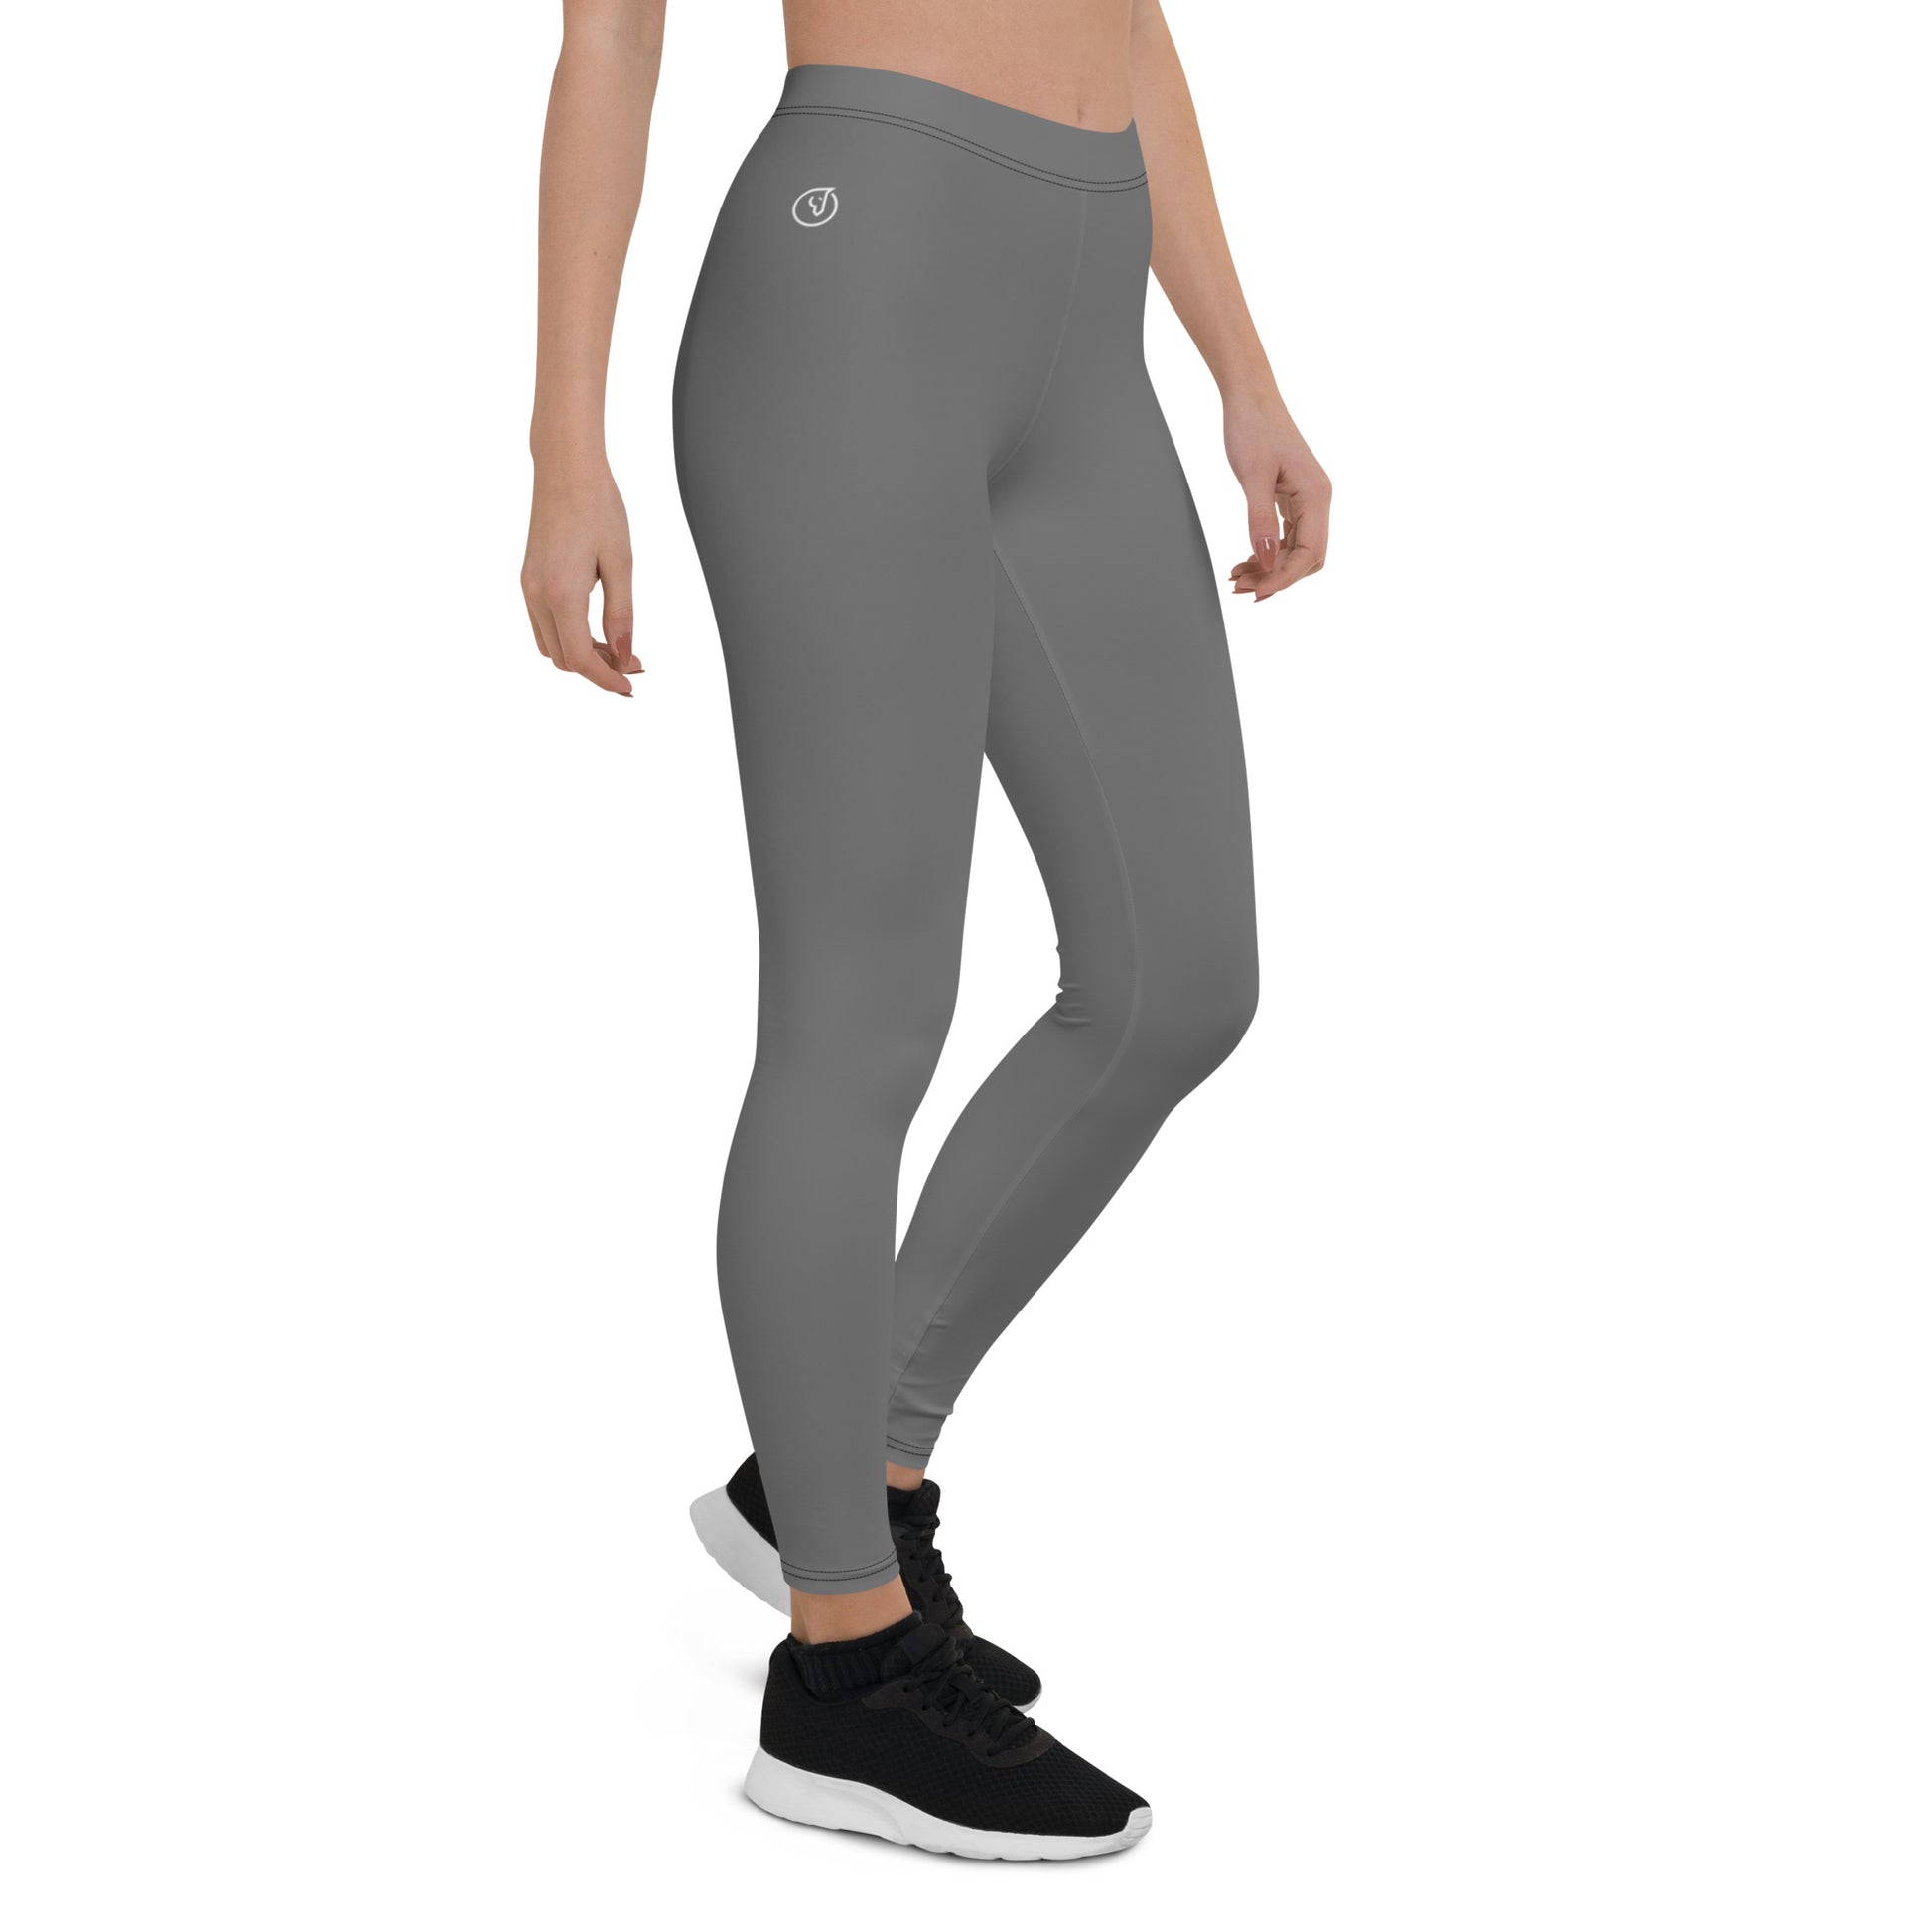 Humble Sportswear, women’s color match leggings, grey leggings, active leggings, gym leggings, workout leggings